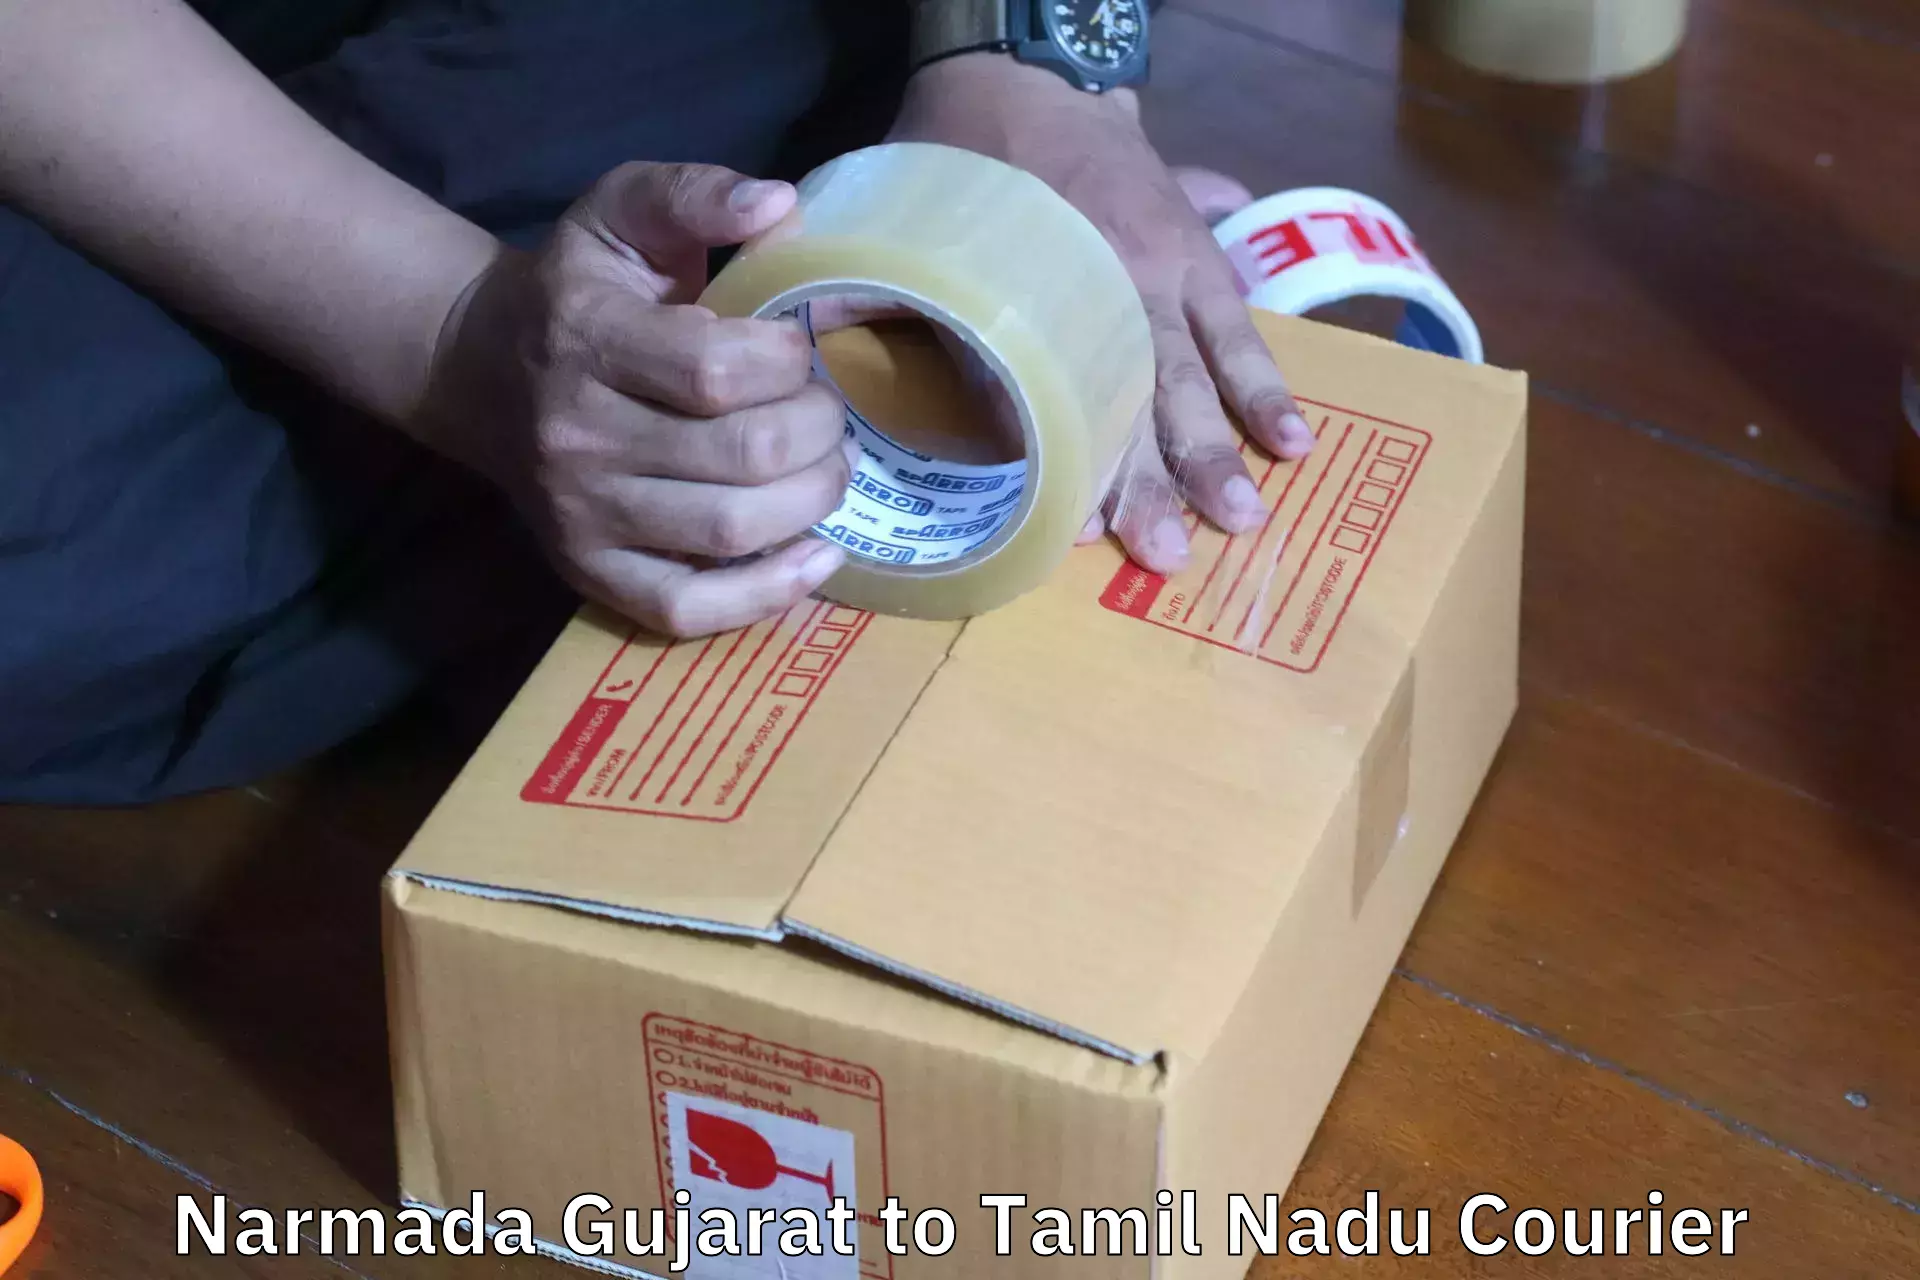 Trusted moving company Narmada Gujarat to Madurai